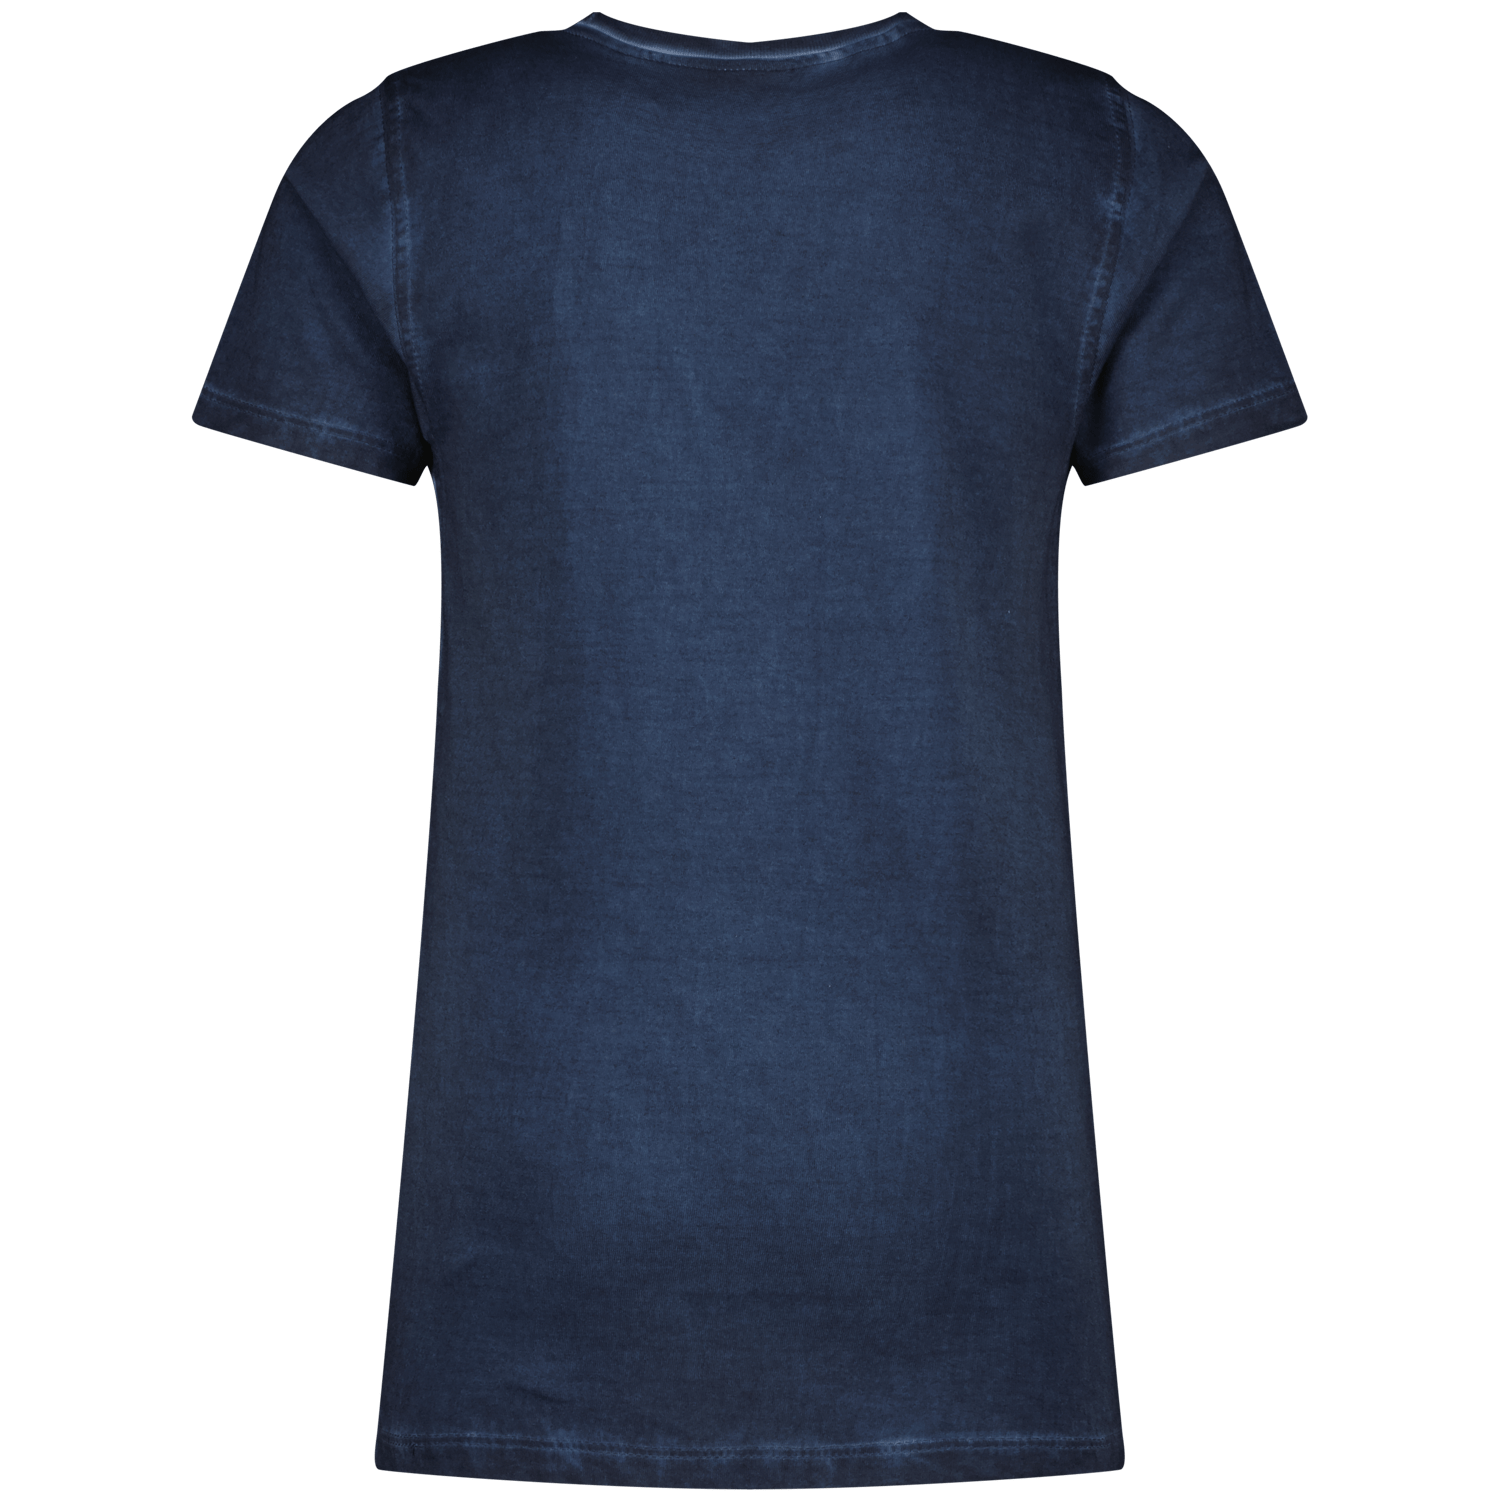 VINGINO T-Shirt Hilod